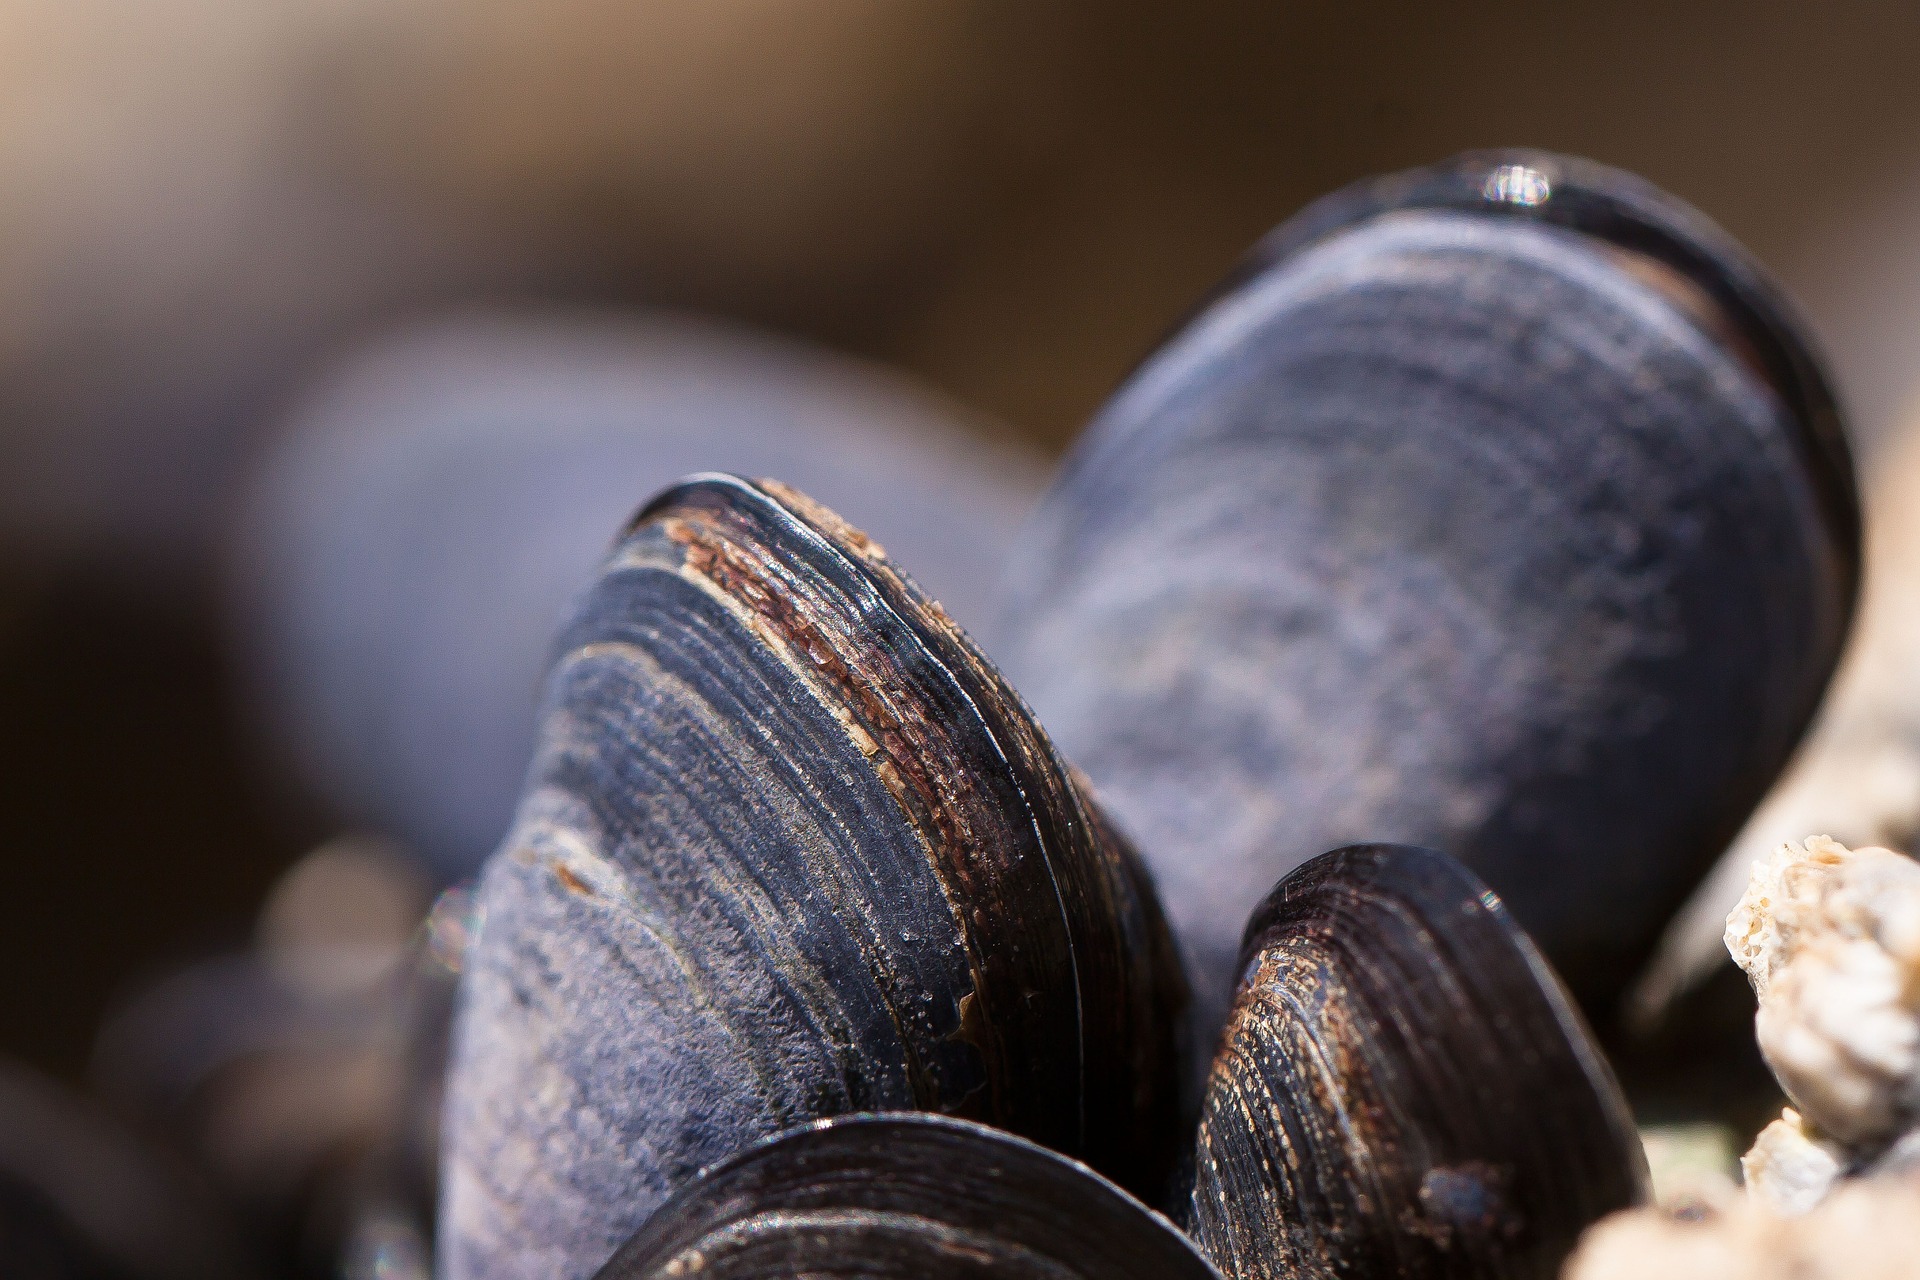 mussels-419052_1920-jpg.912569